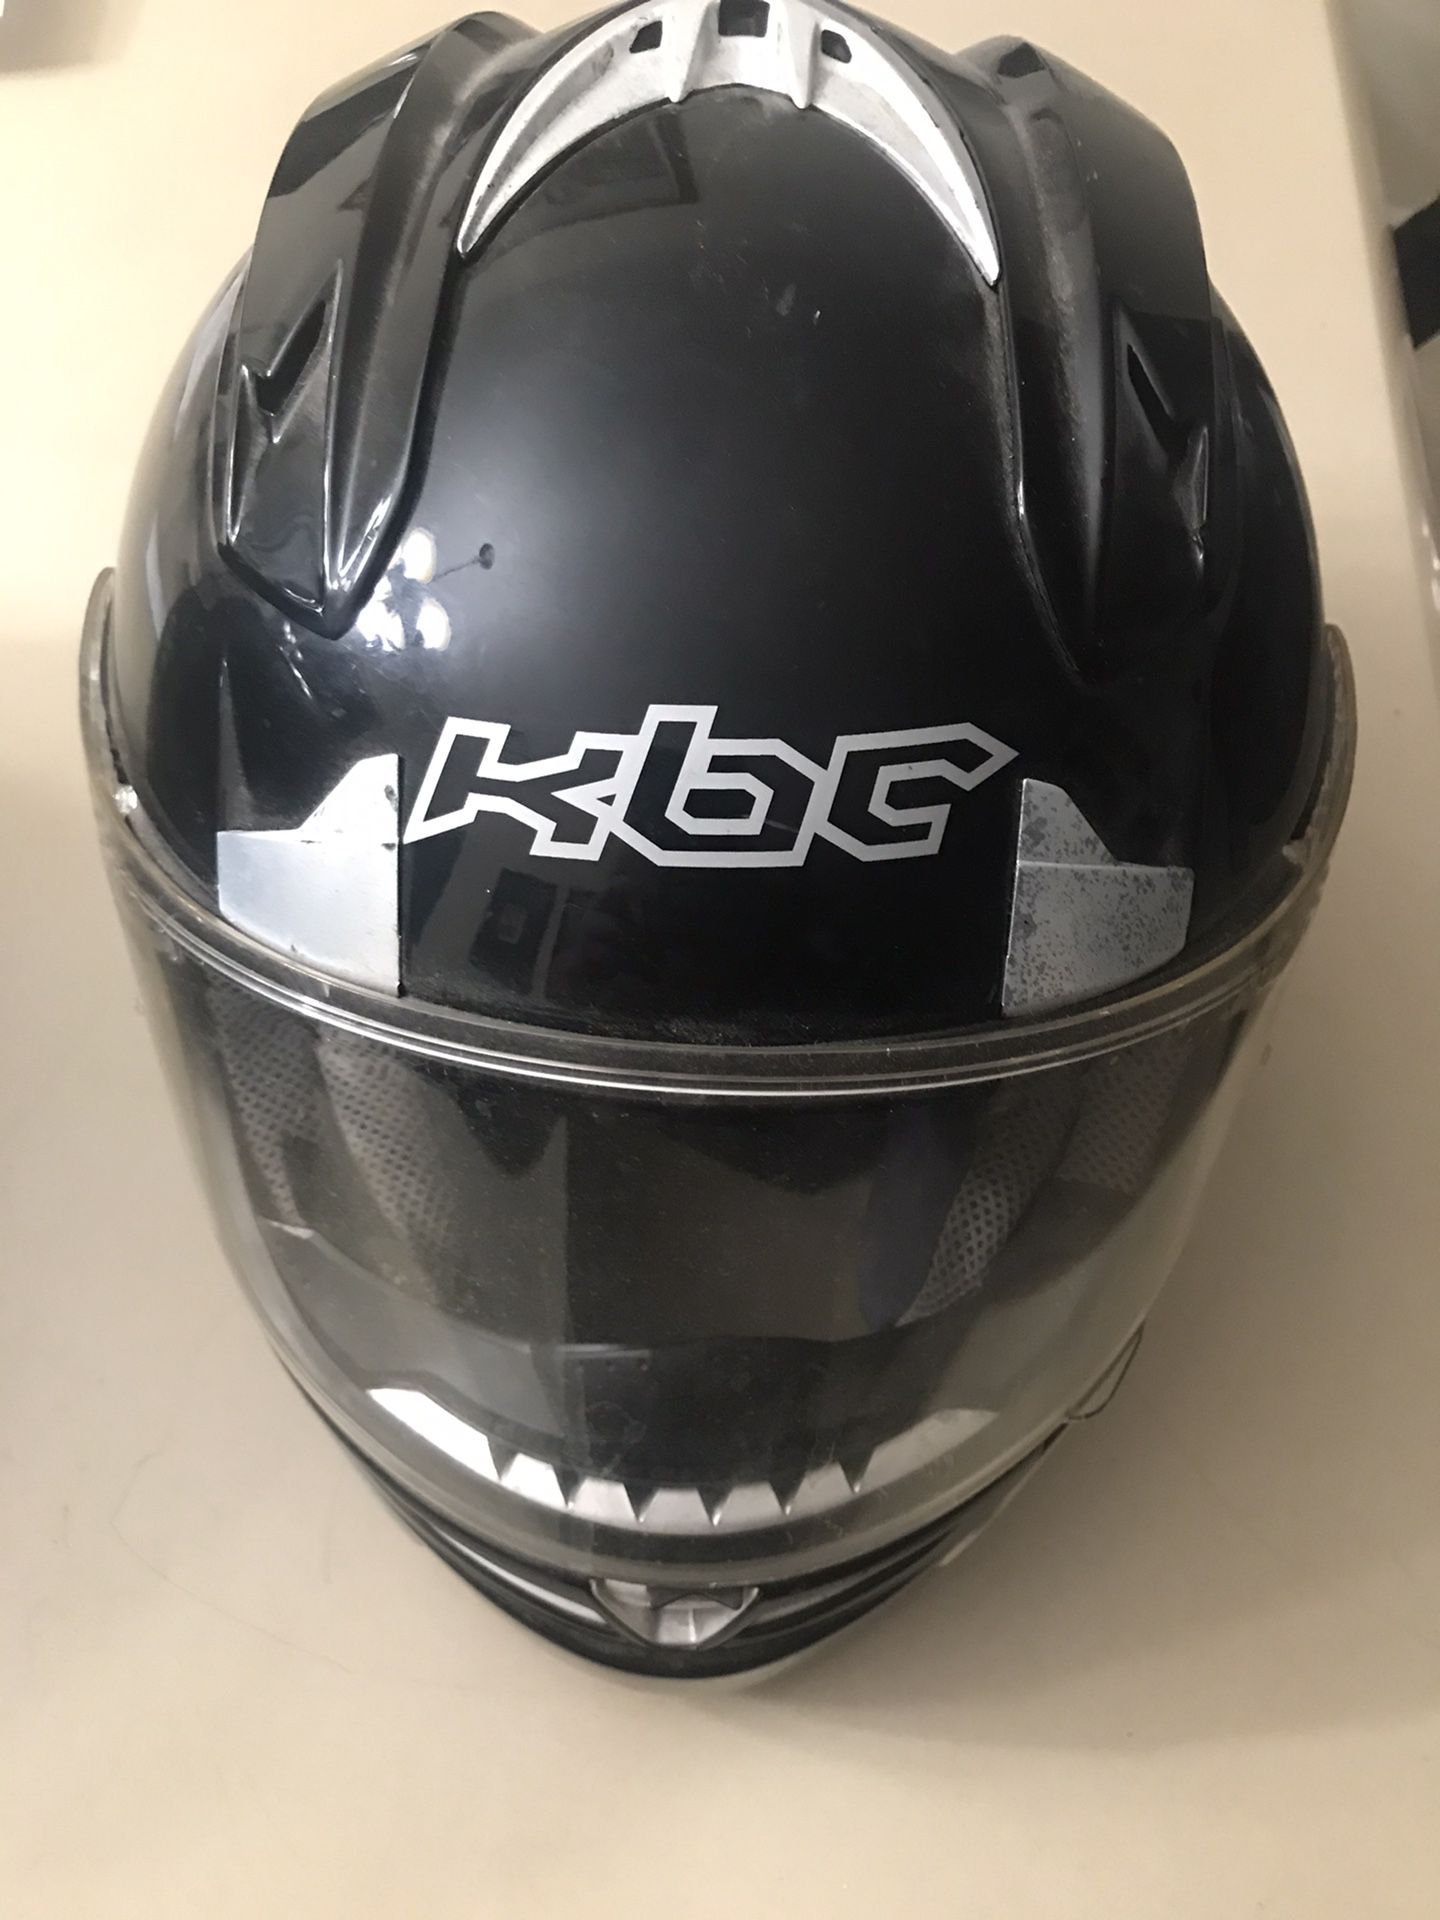 KBC Black Snell DOT motorcycle helmet